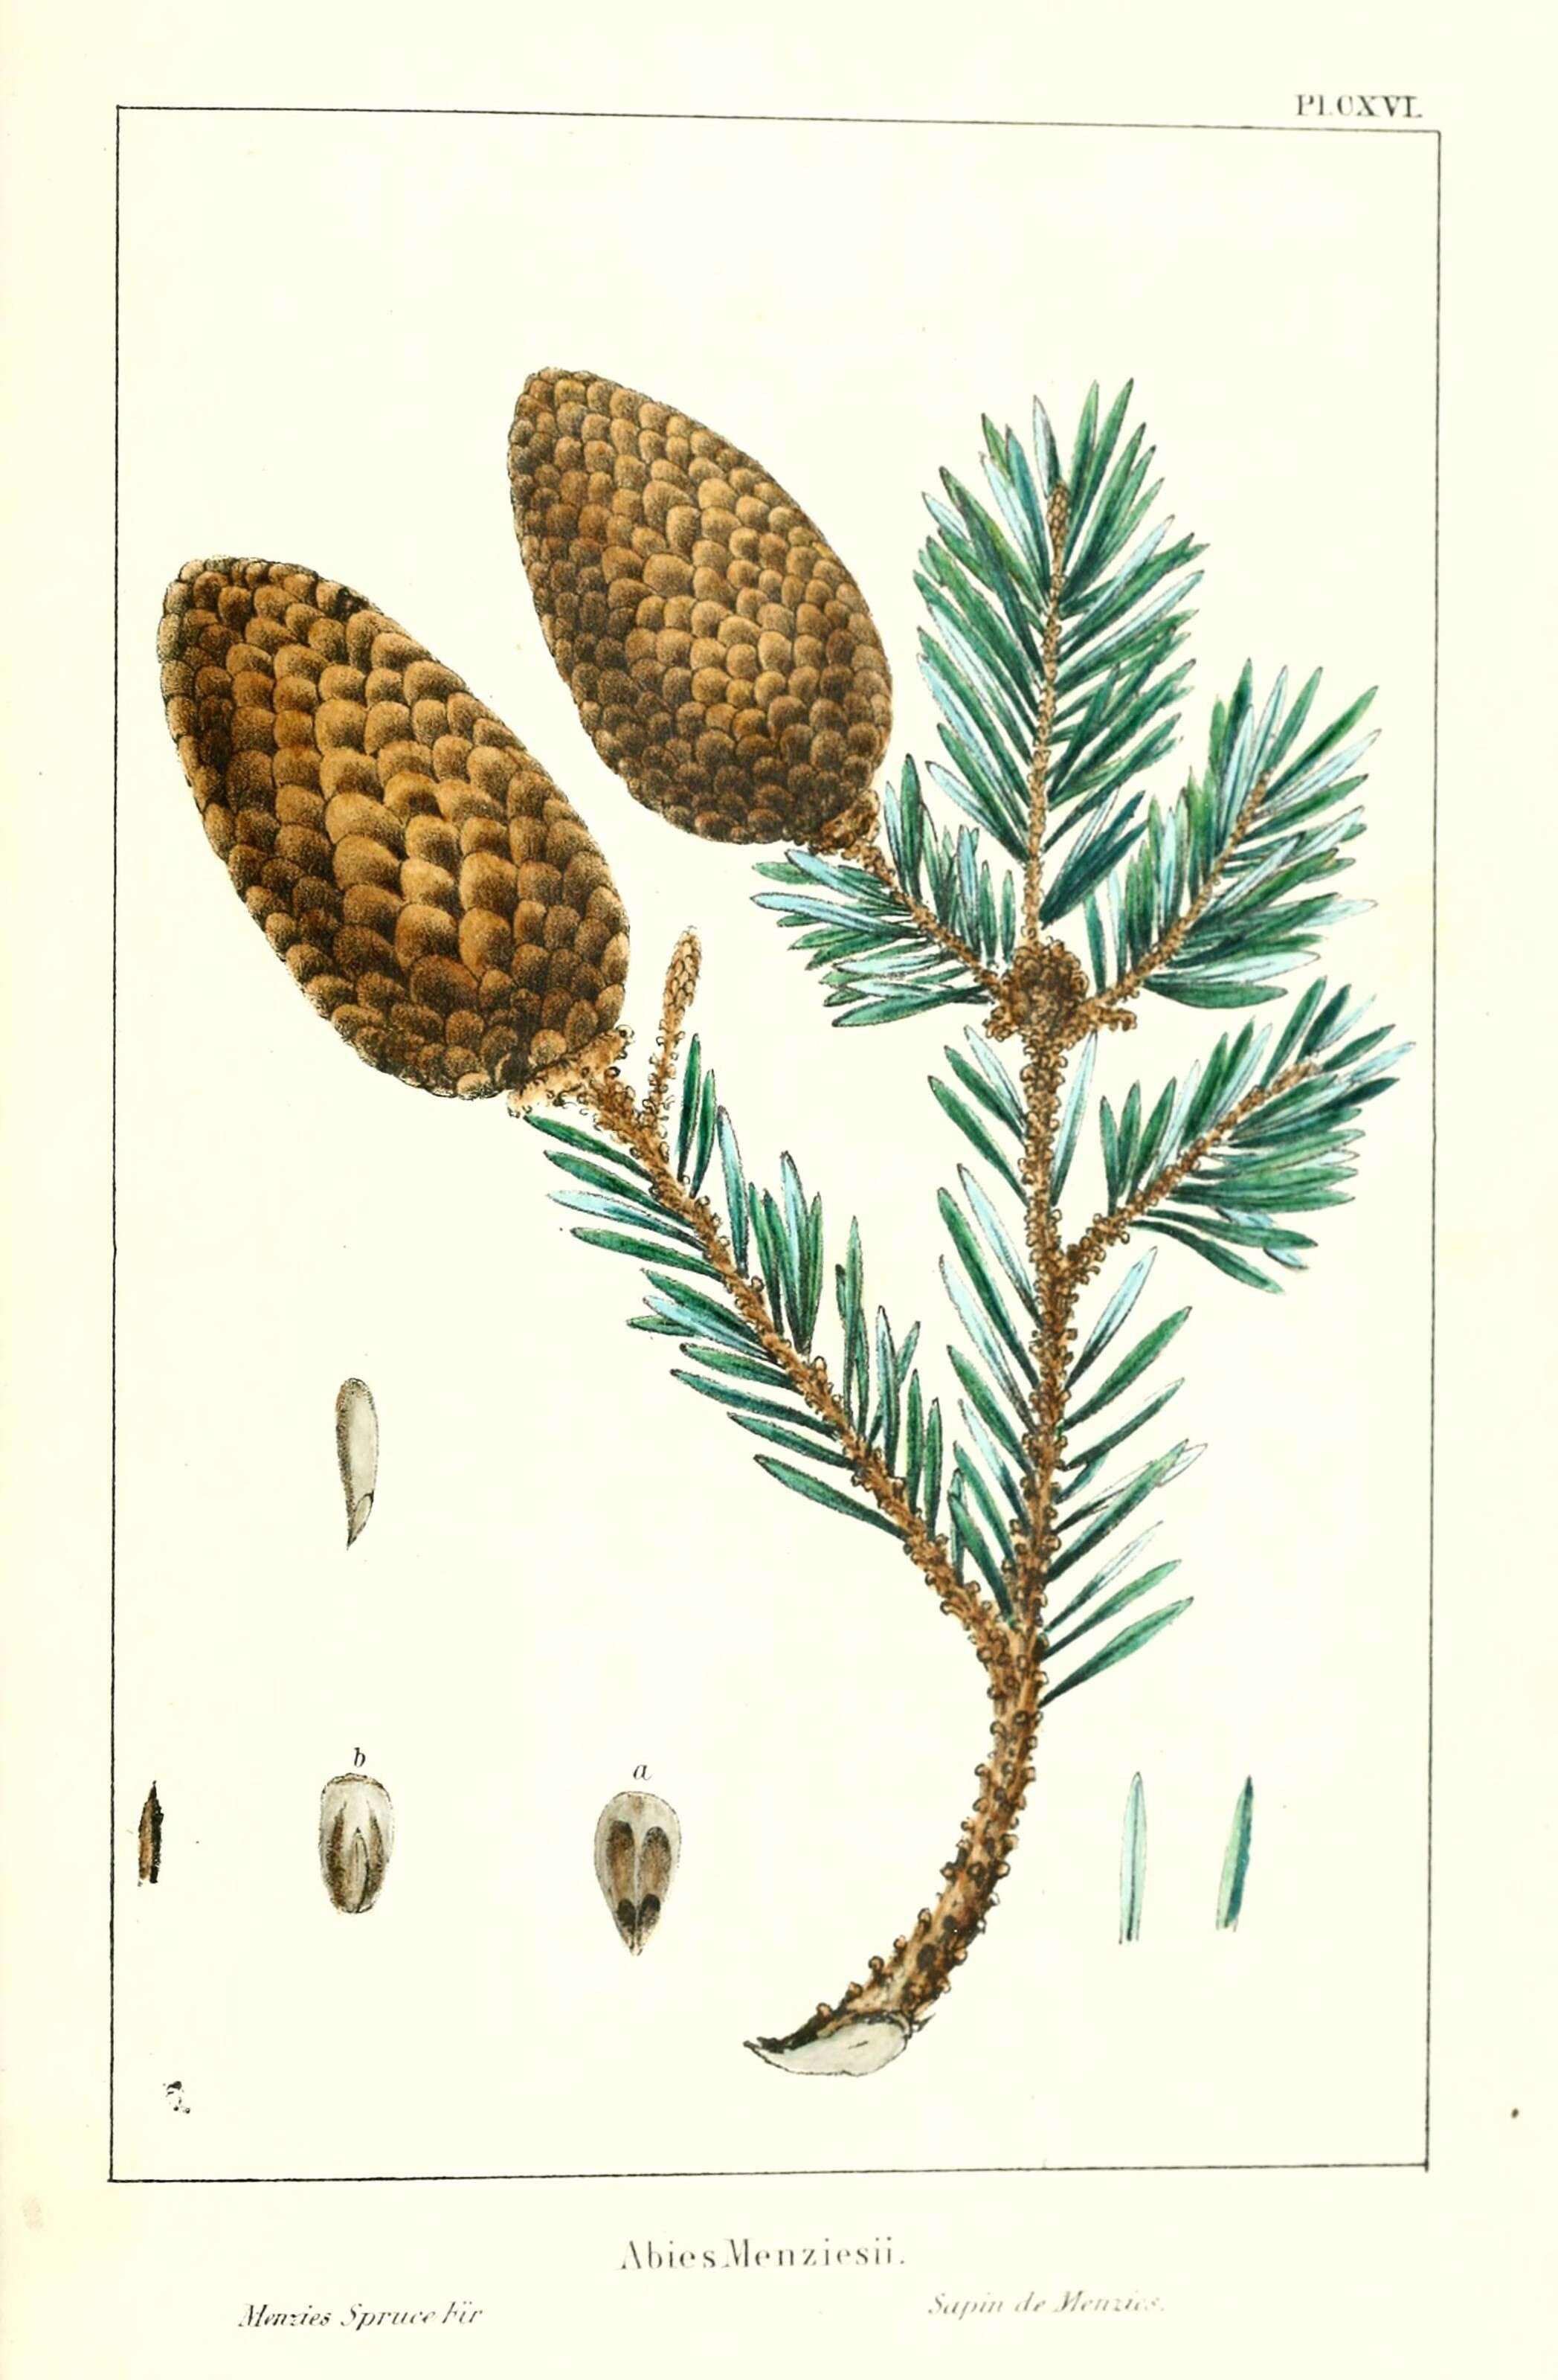 Image of Sitka Spruce